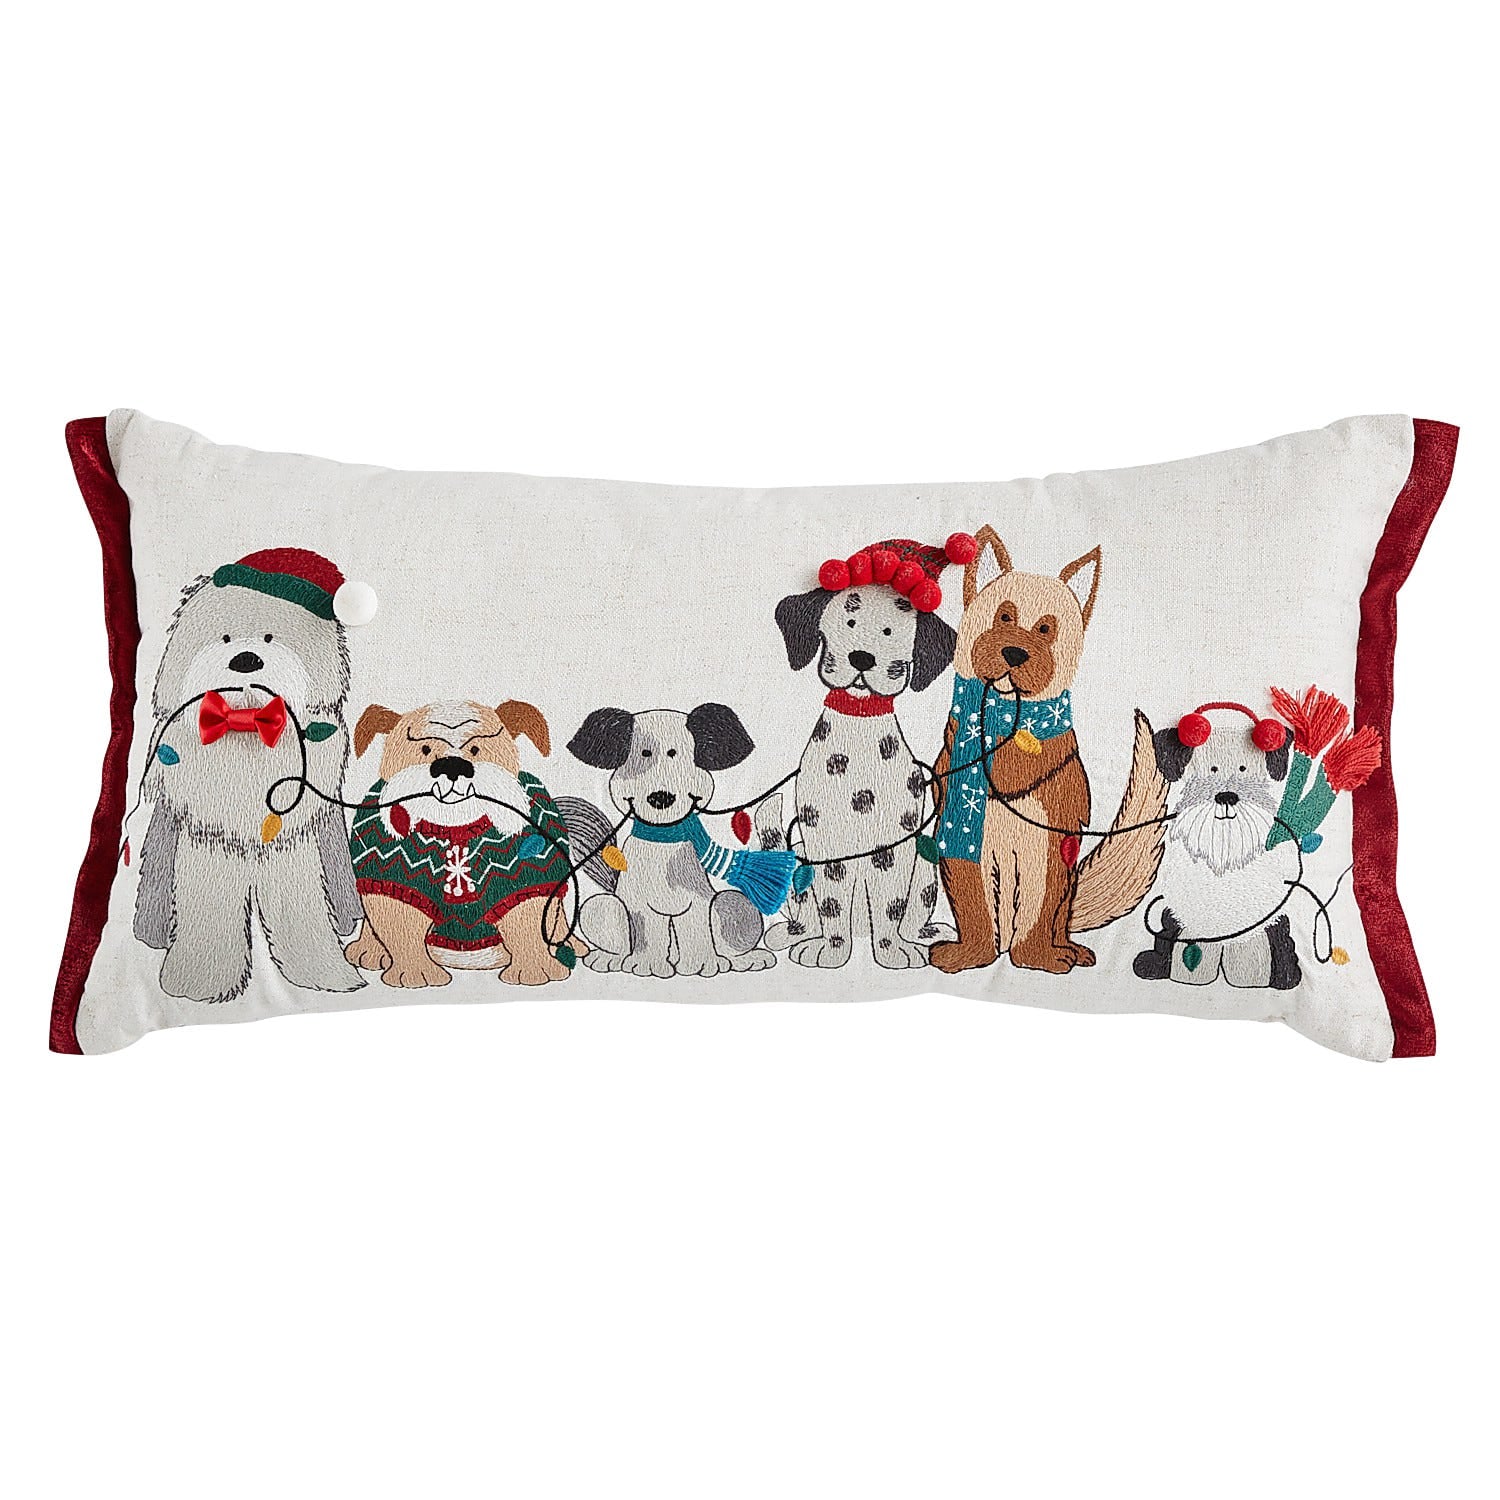 Dogs With Christmas Lights Lumbar Pillow